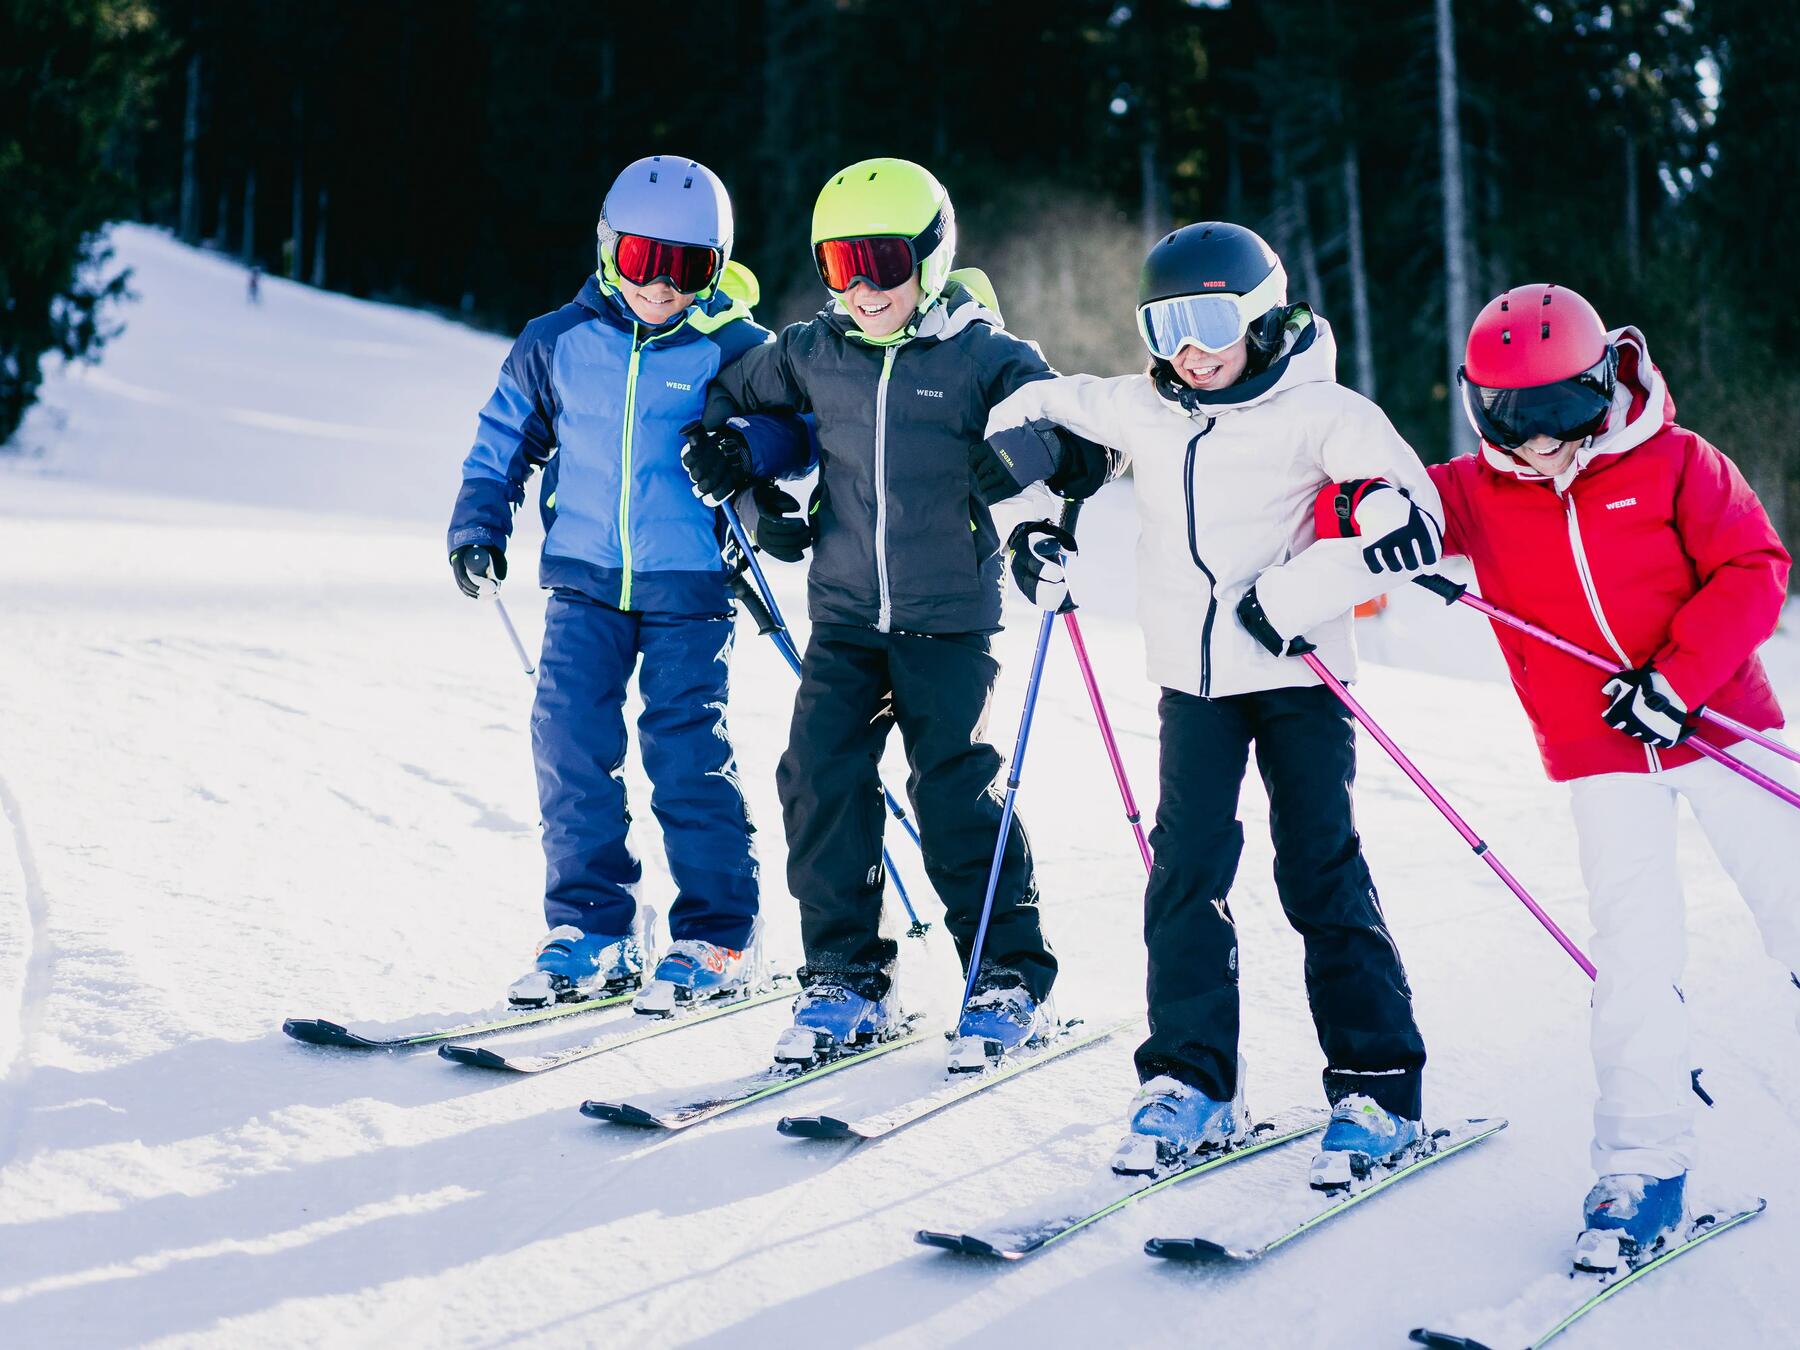 How to choose kids’ ski trousers?